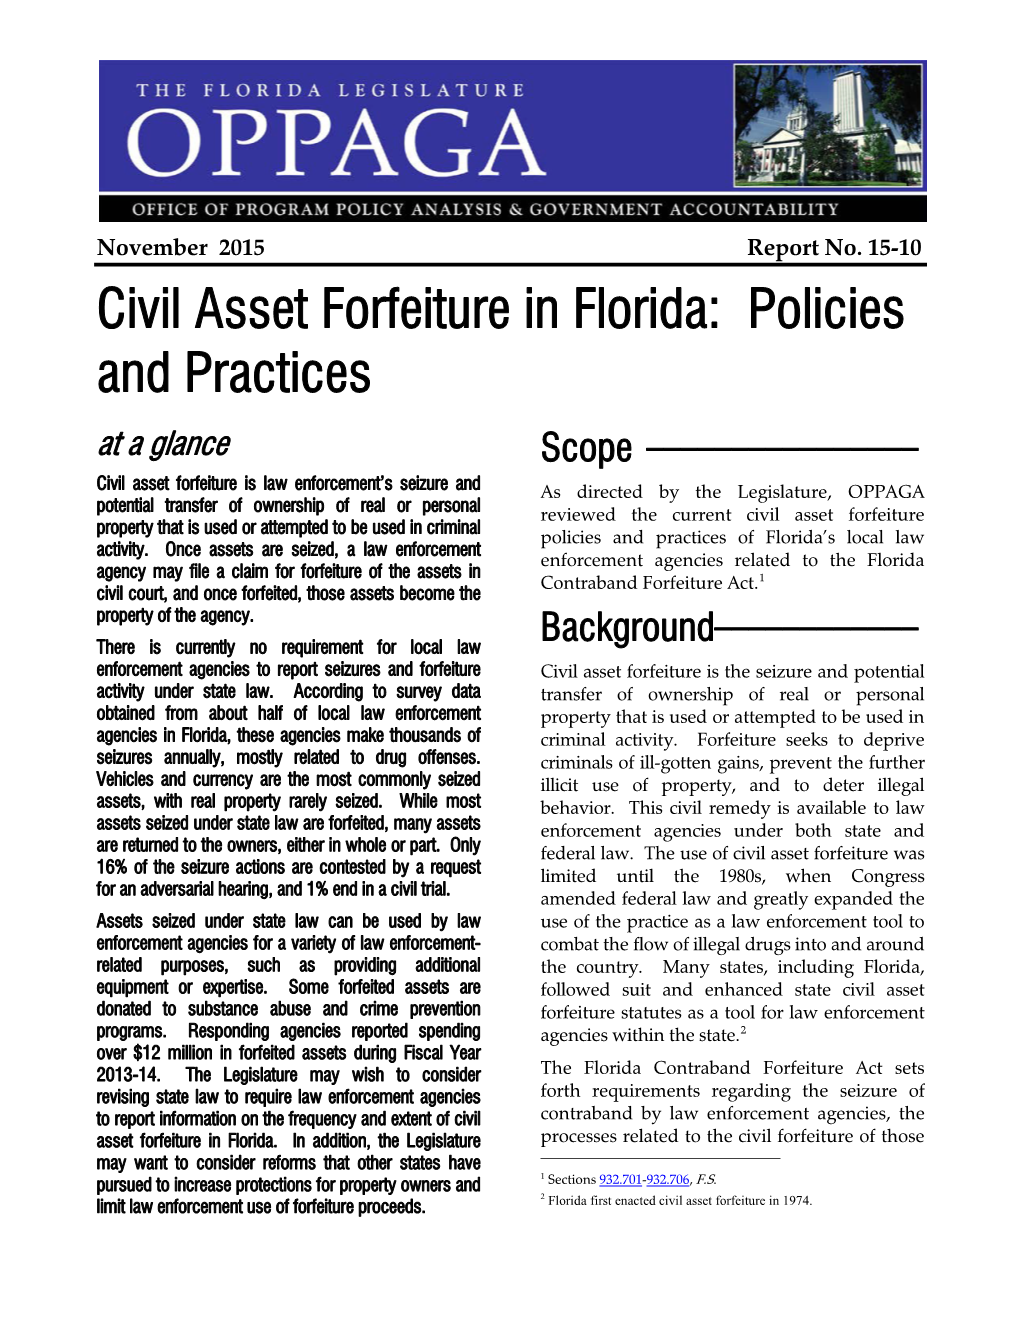 Civil Asset Forfeiture in Florida